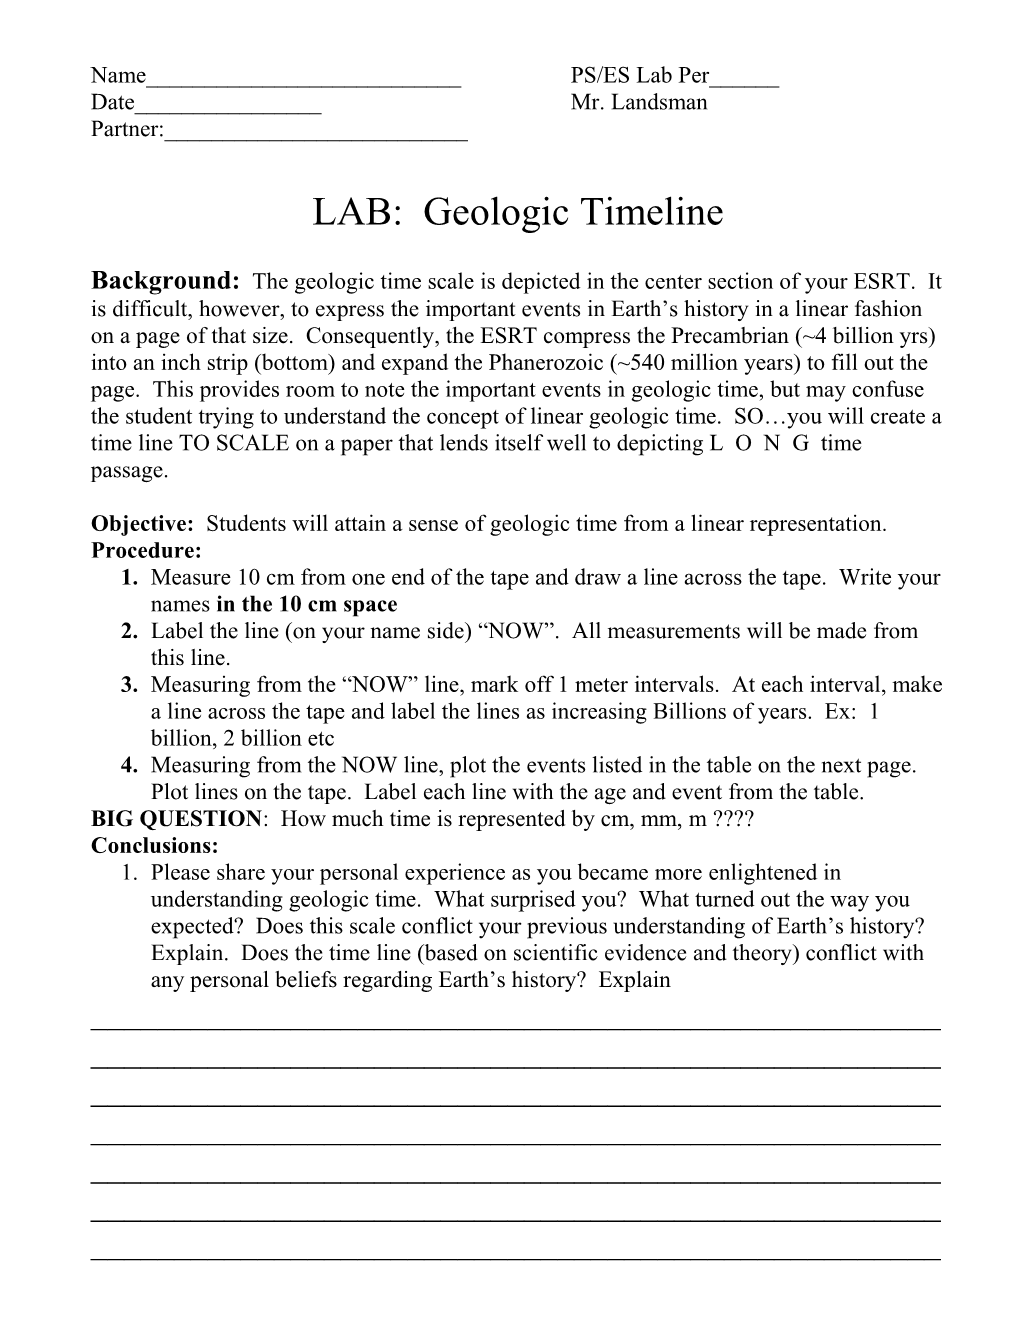 LAB: Geologic Timeline